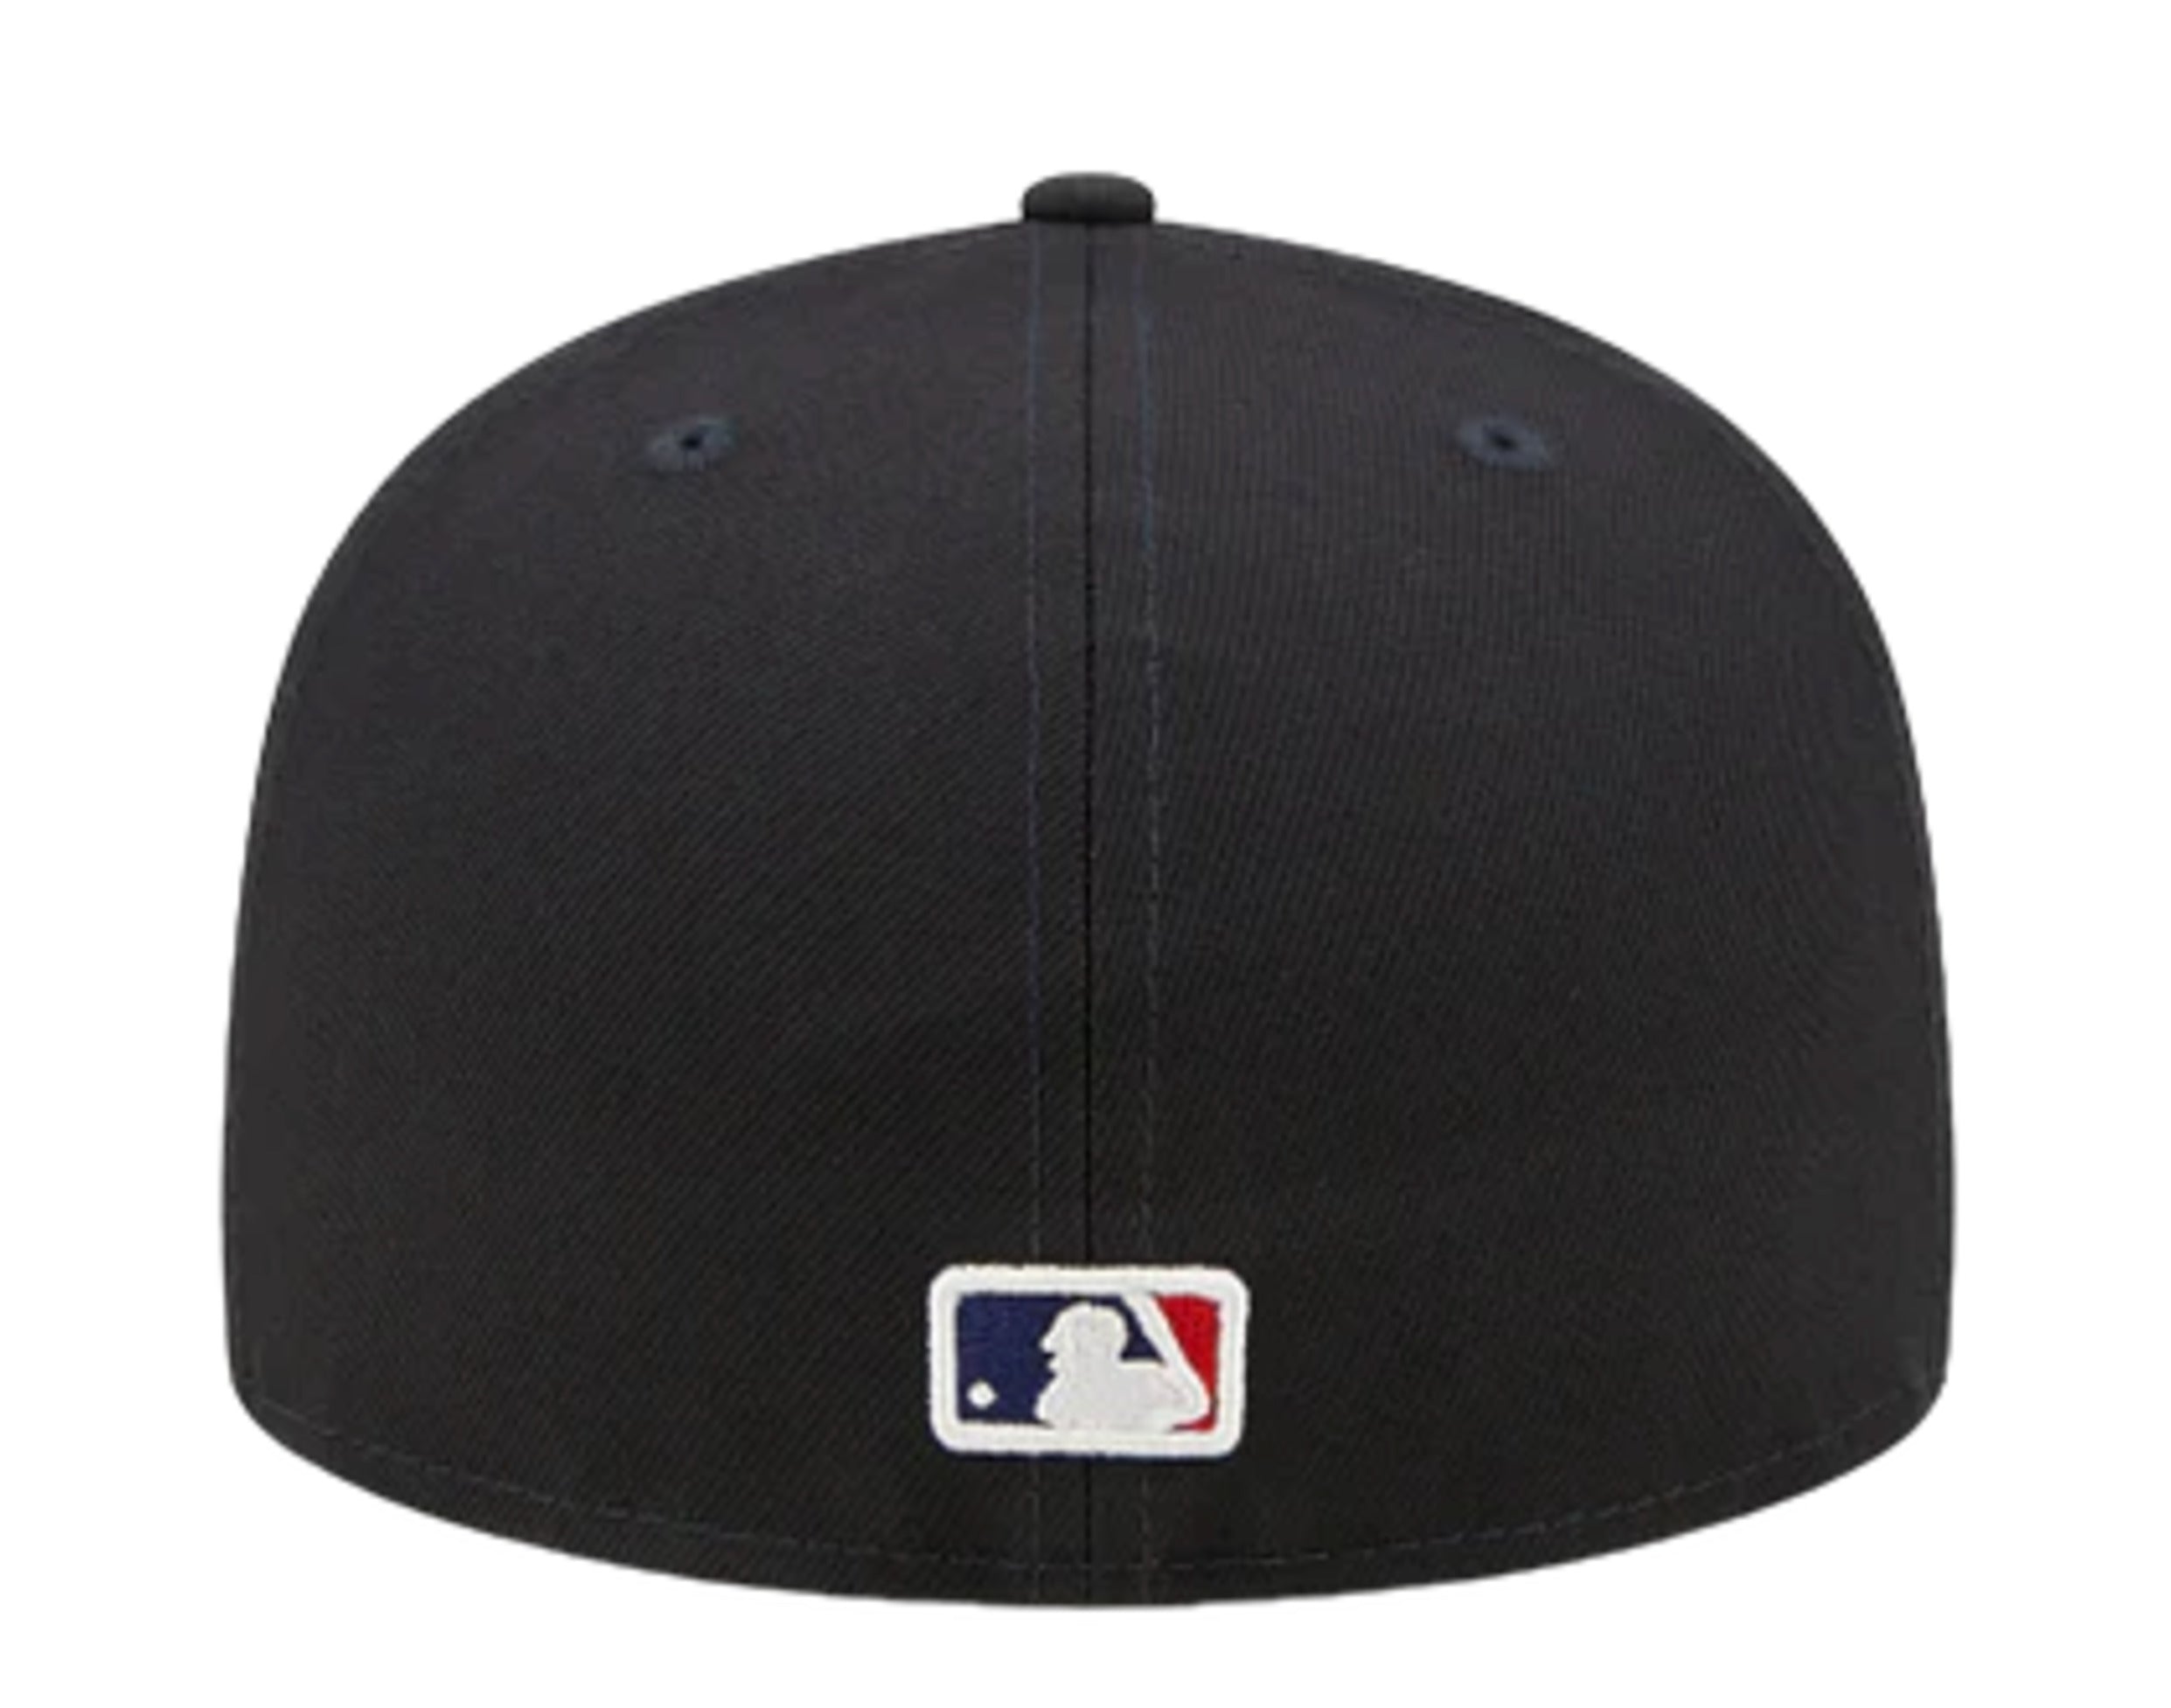 New Era 59Fifty MLB Cincinnati Reds Groovy Fitted Hat